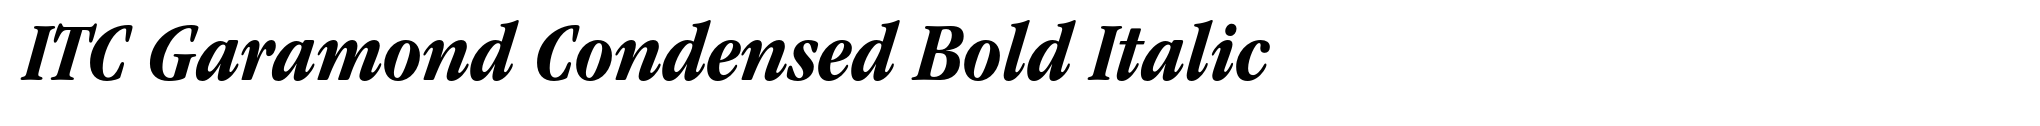 ITC Garamond Condensed Bold Italic image